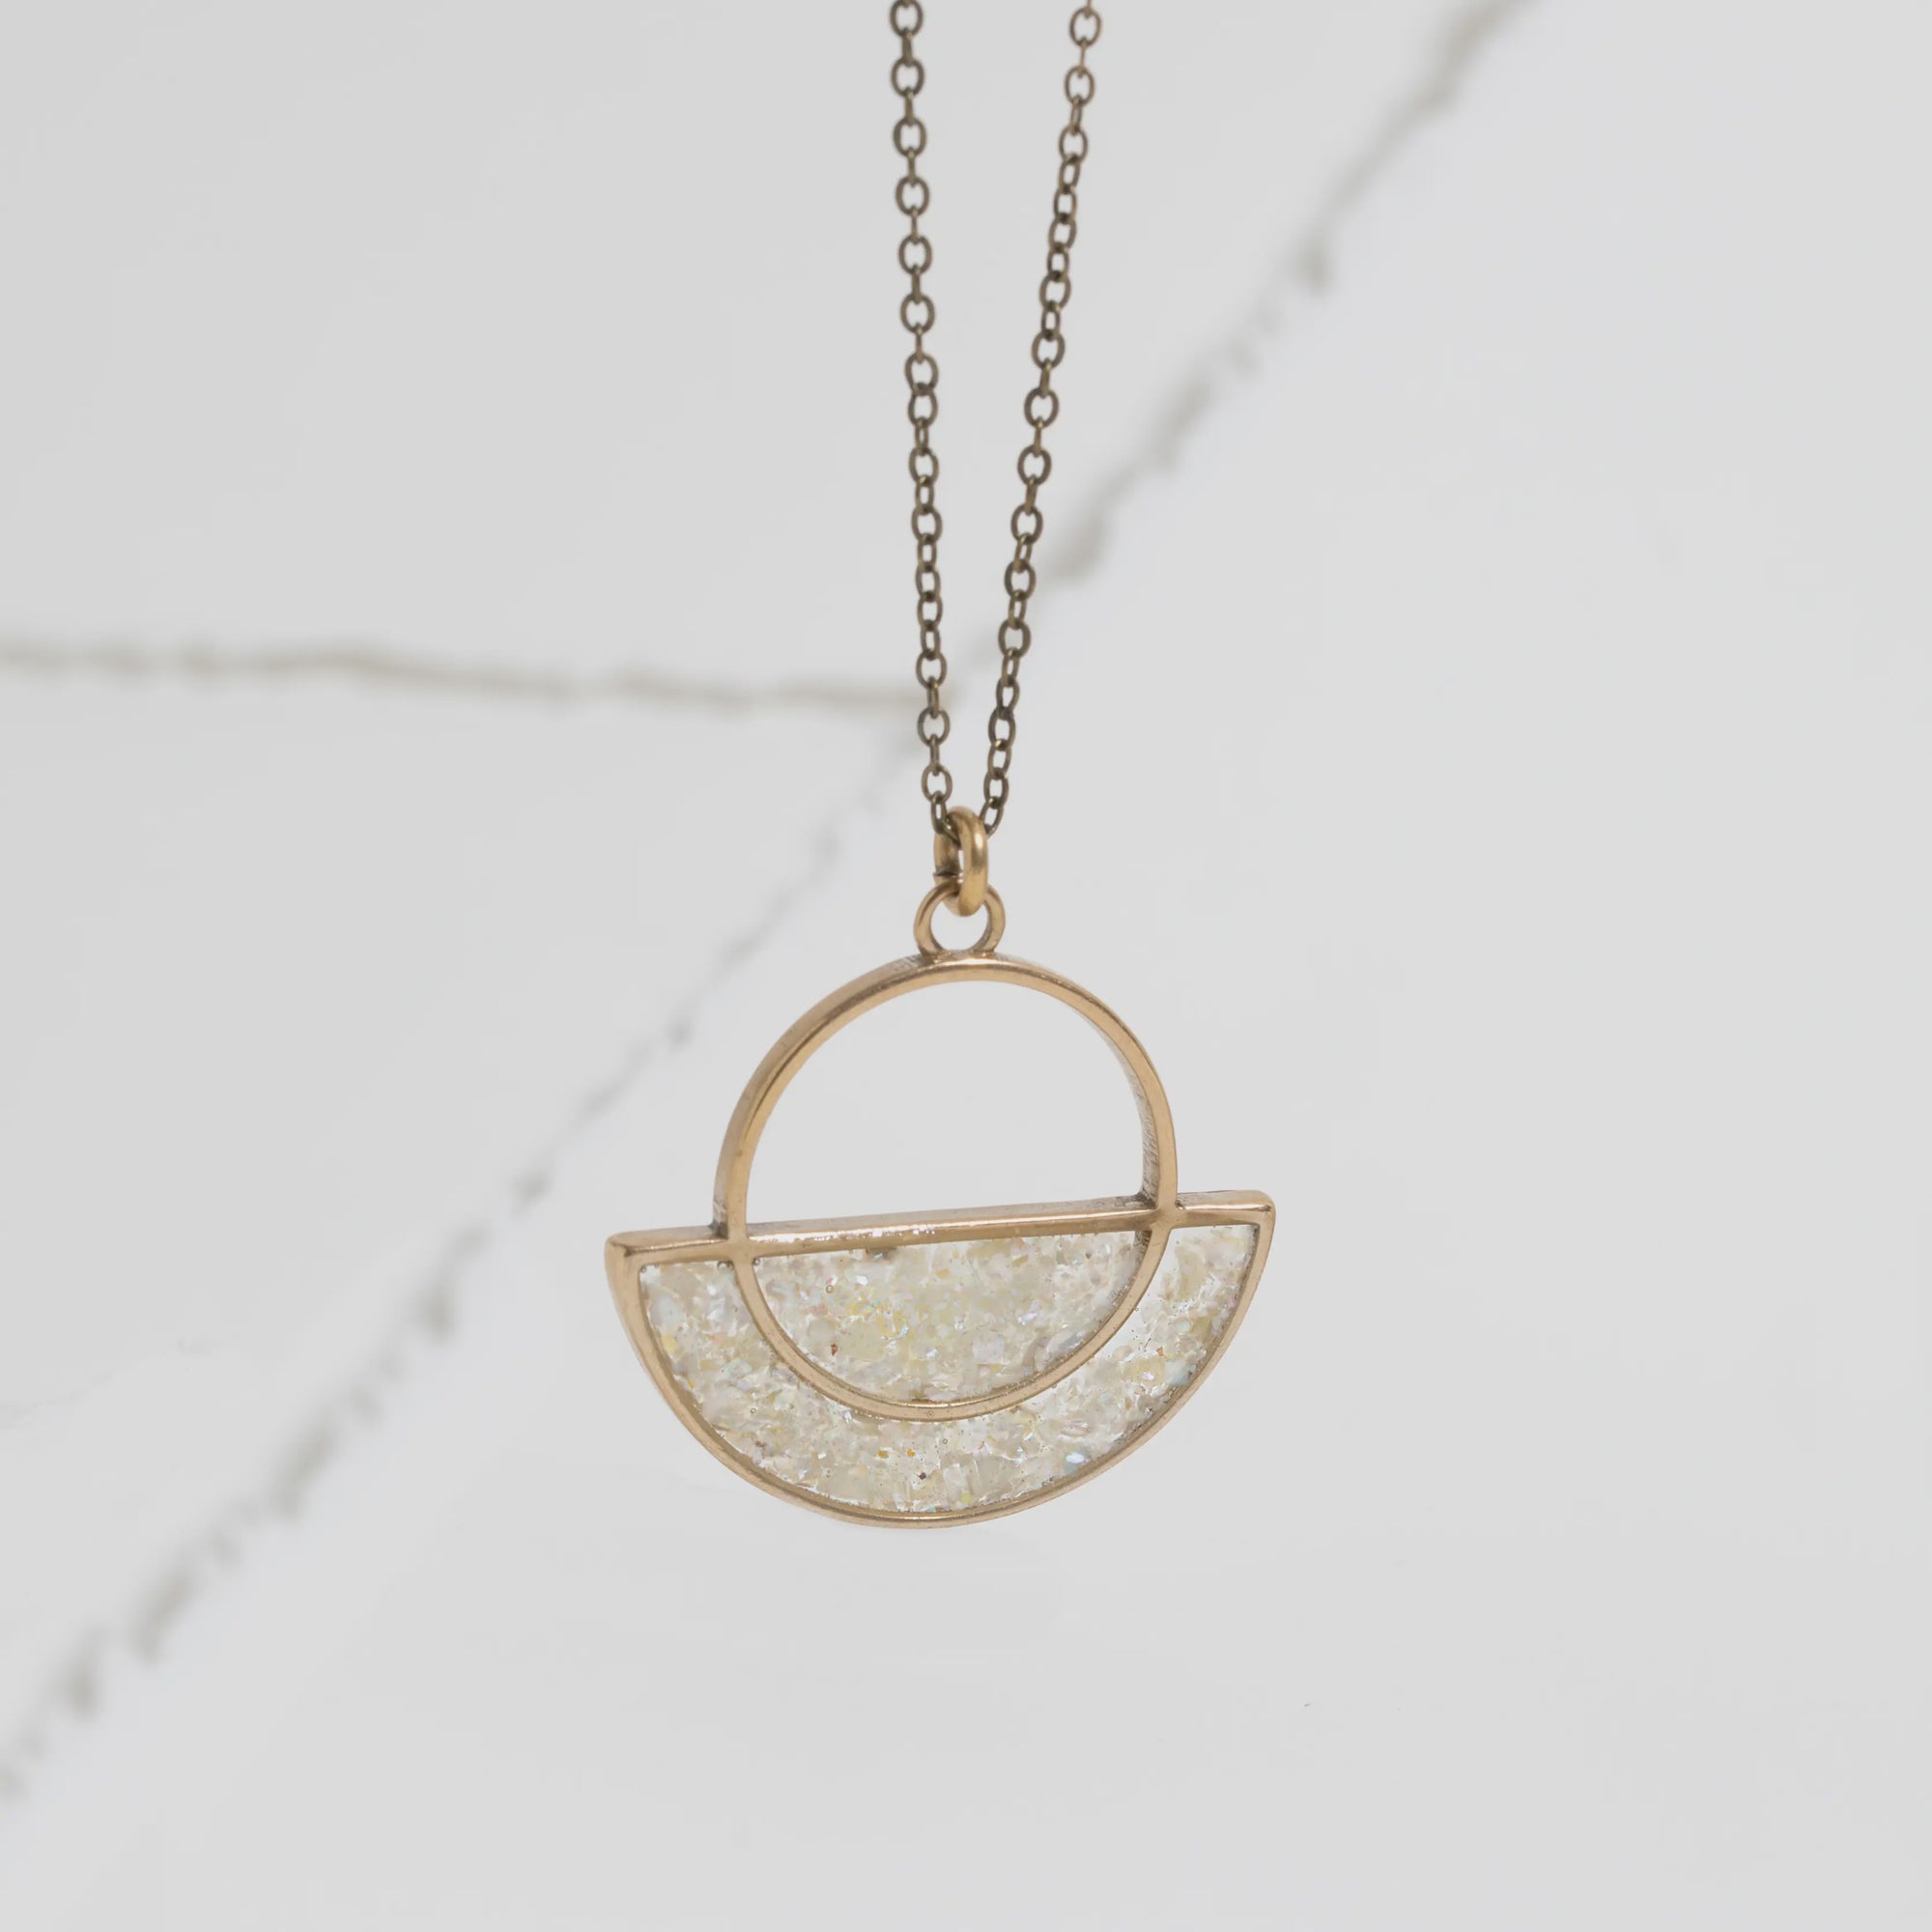 The Moonrise Pendant Necklace